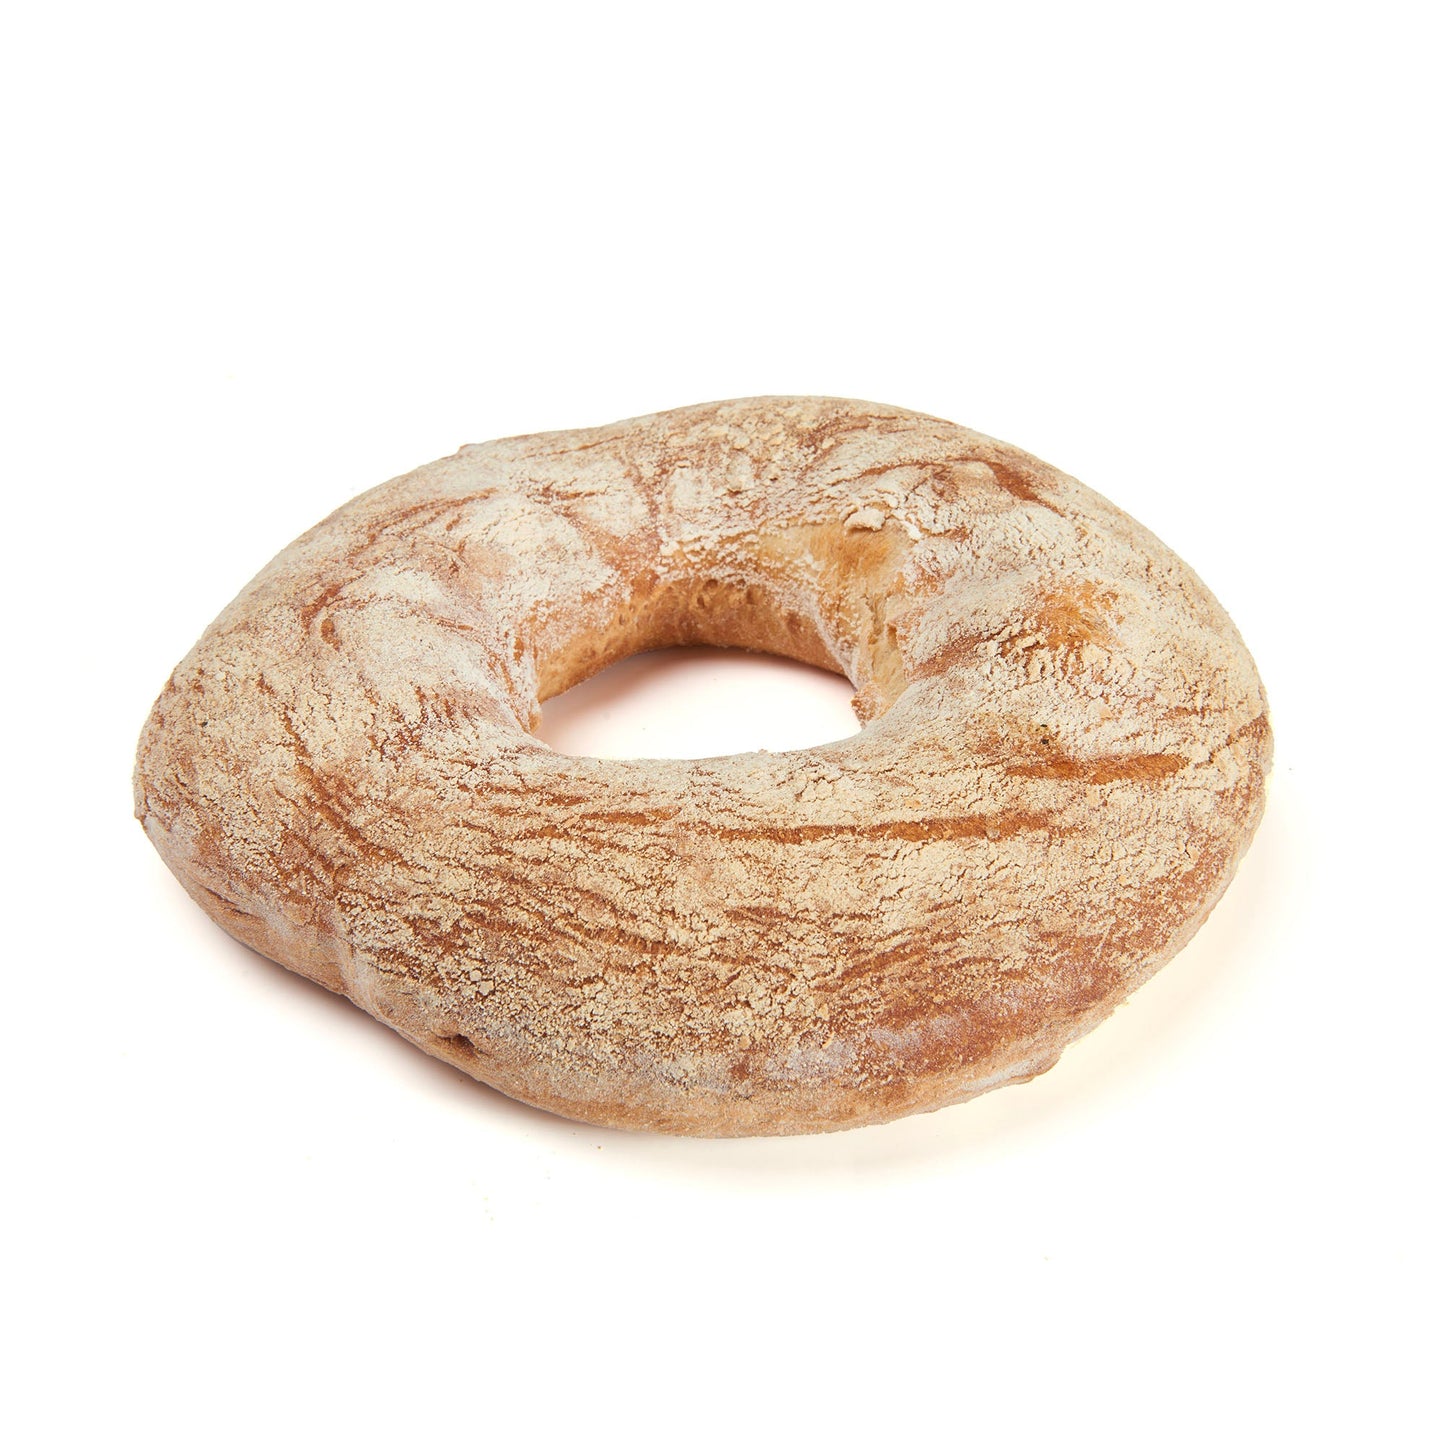 Round Calabrese Bread